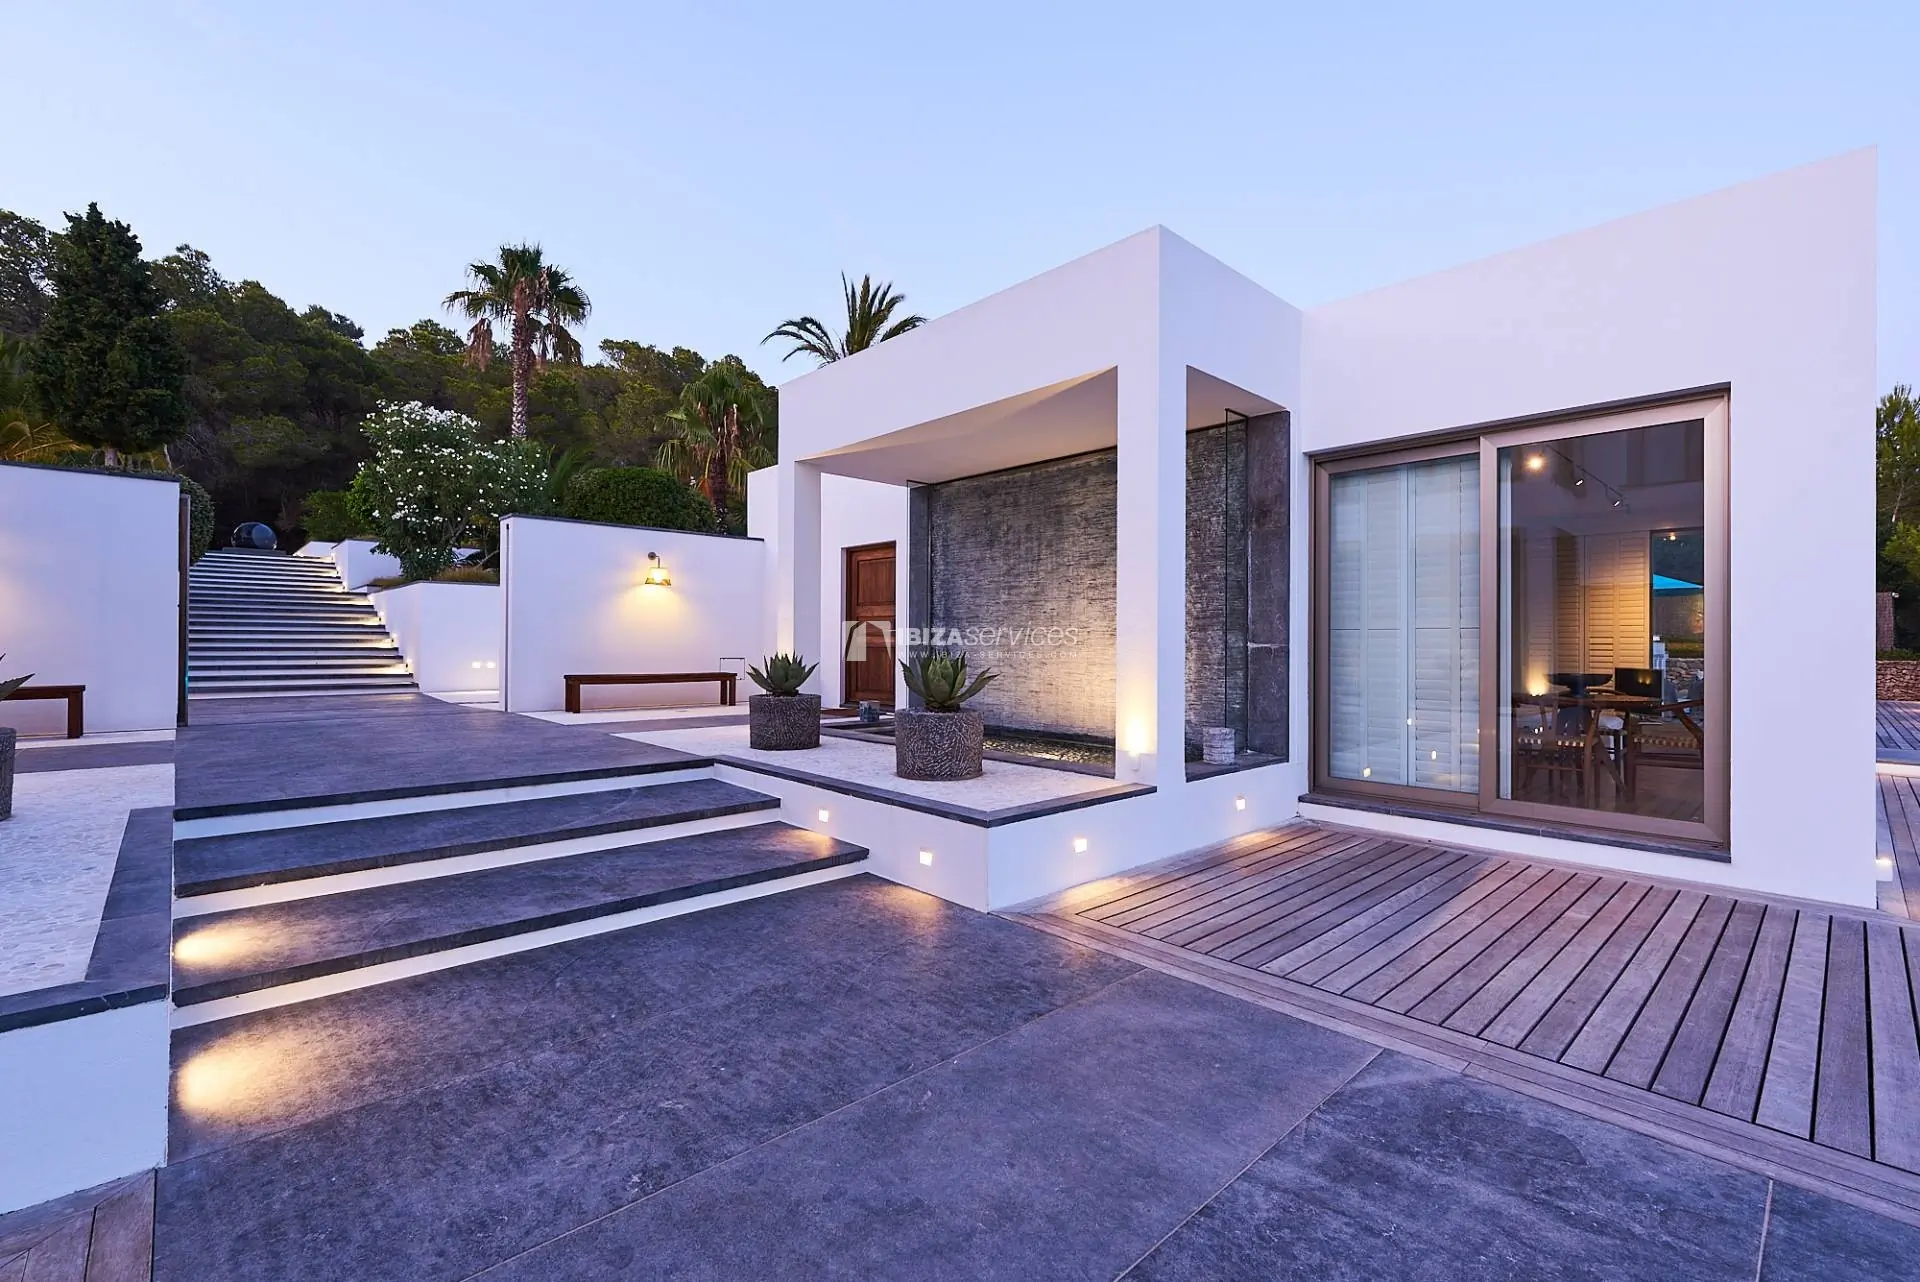 6 bedroom super luxury Ibiza villa situated in Km5